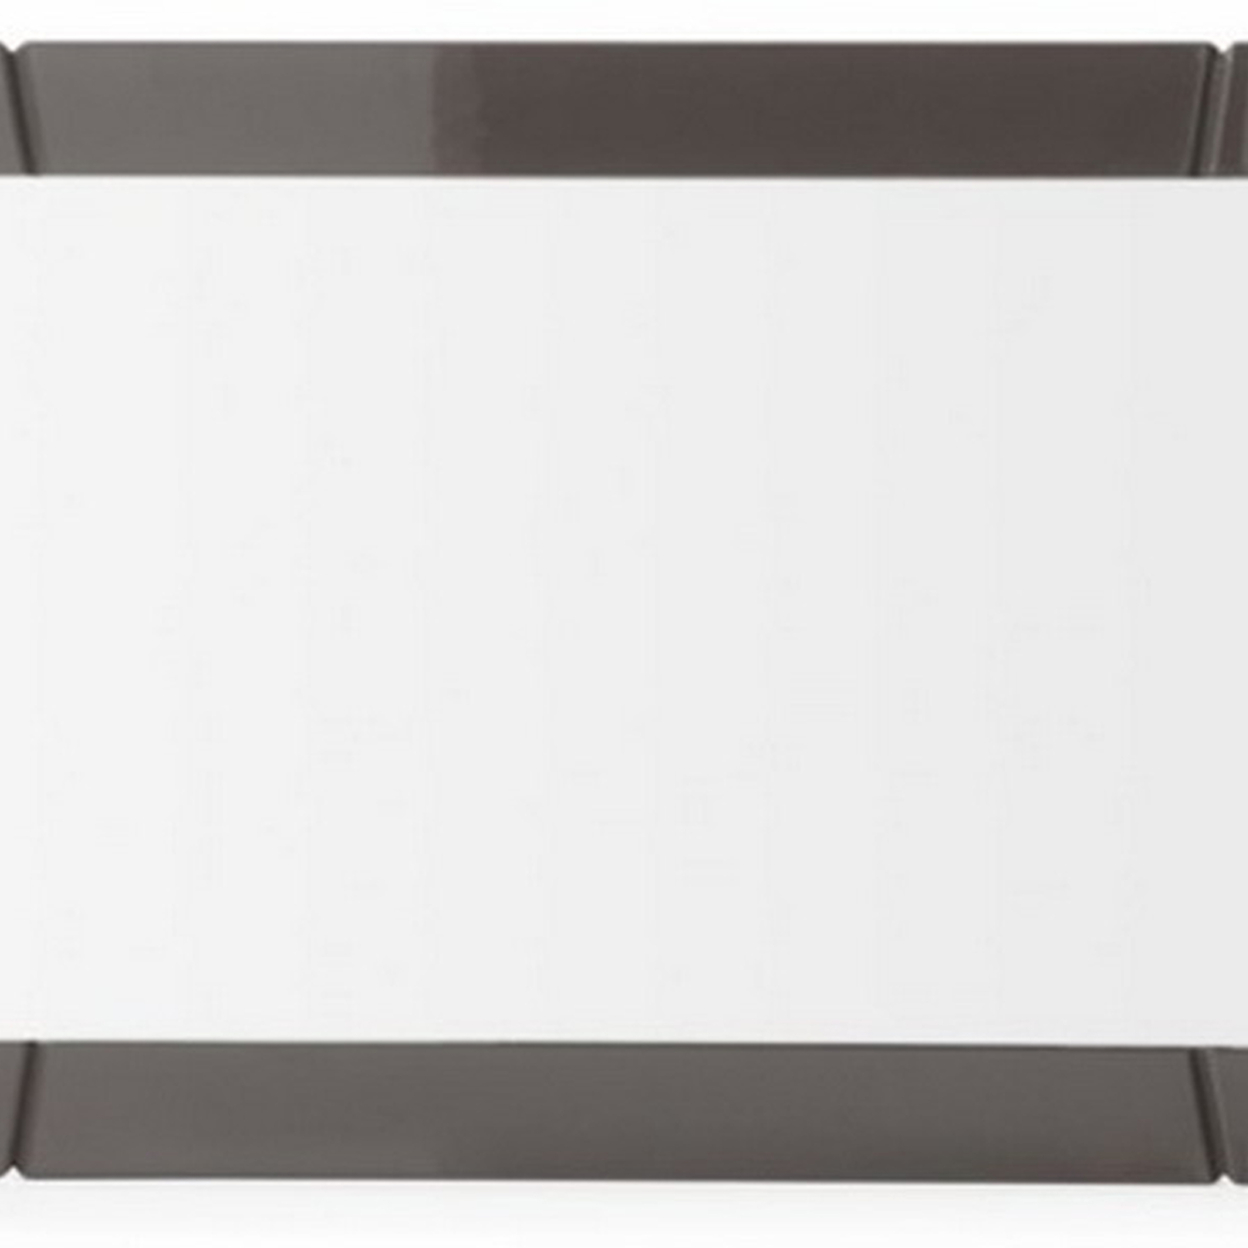 Contemporary Style Wall Mirror With Rectangle Framework, Gray- Saltoro Sherpi